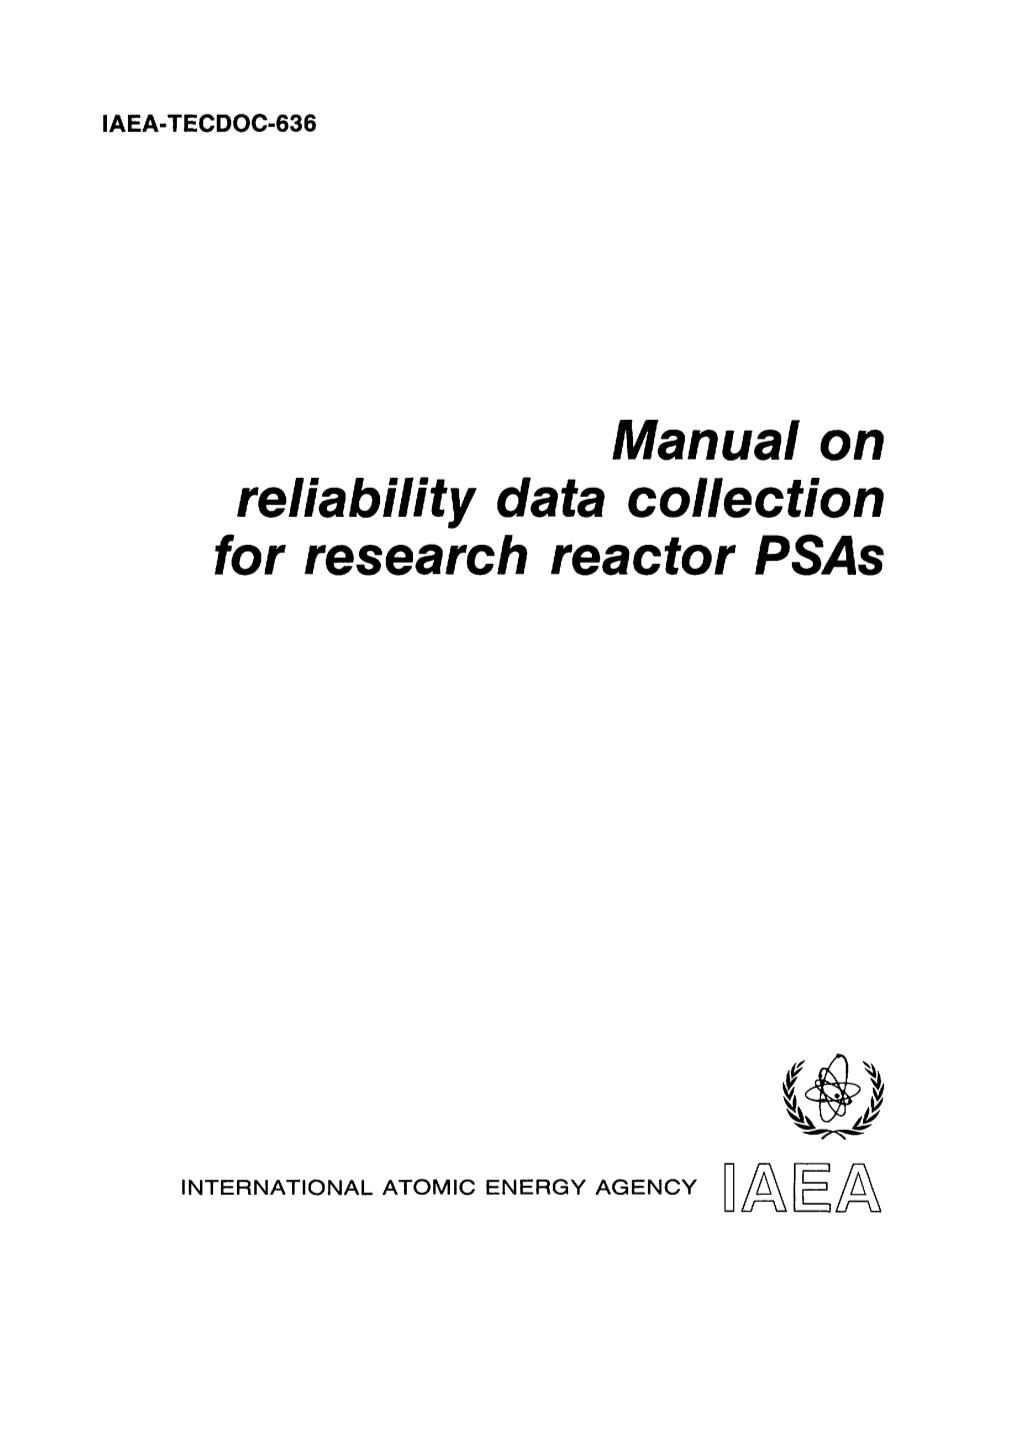 MANUAL on RELIABILITY DATA COLLECTION for RESEARCH REACTOR Psas IAEA, VIENNA, 1992 IAEA-TECDOC-636 ISSN 1011-4289